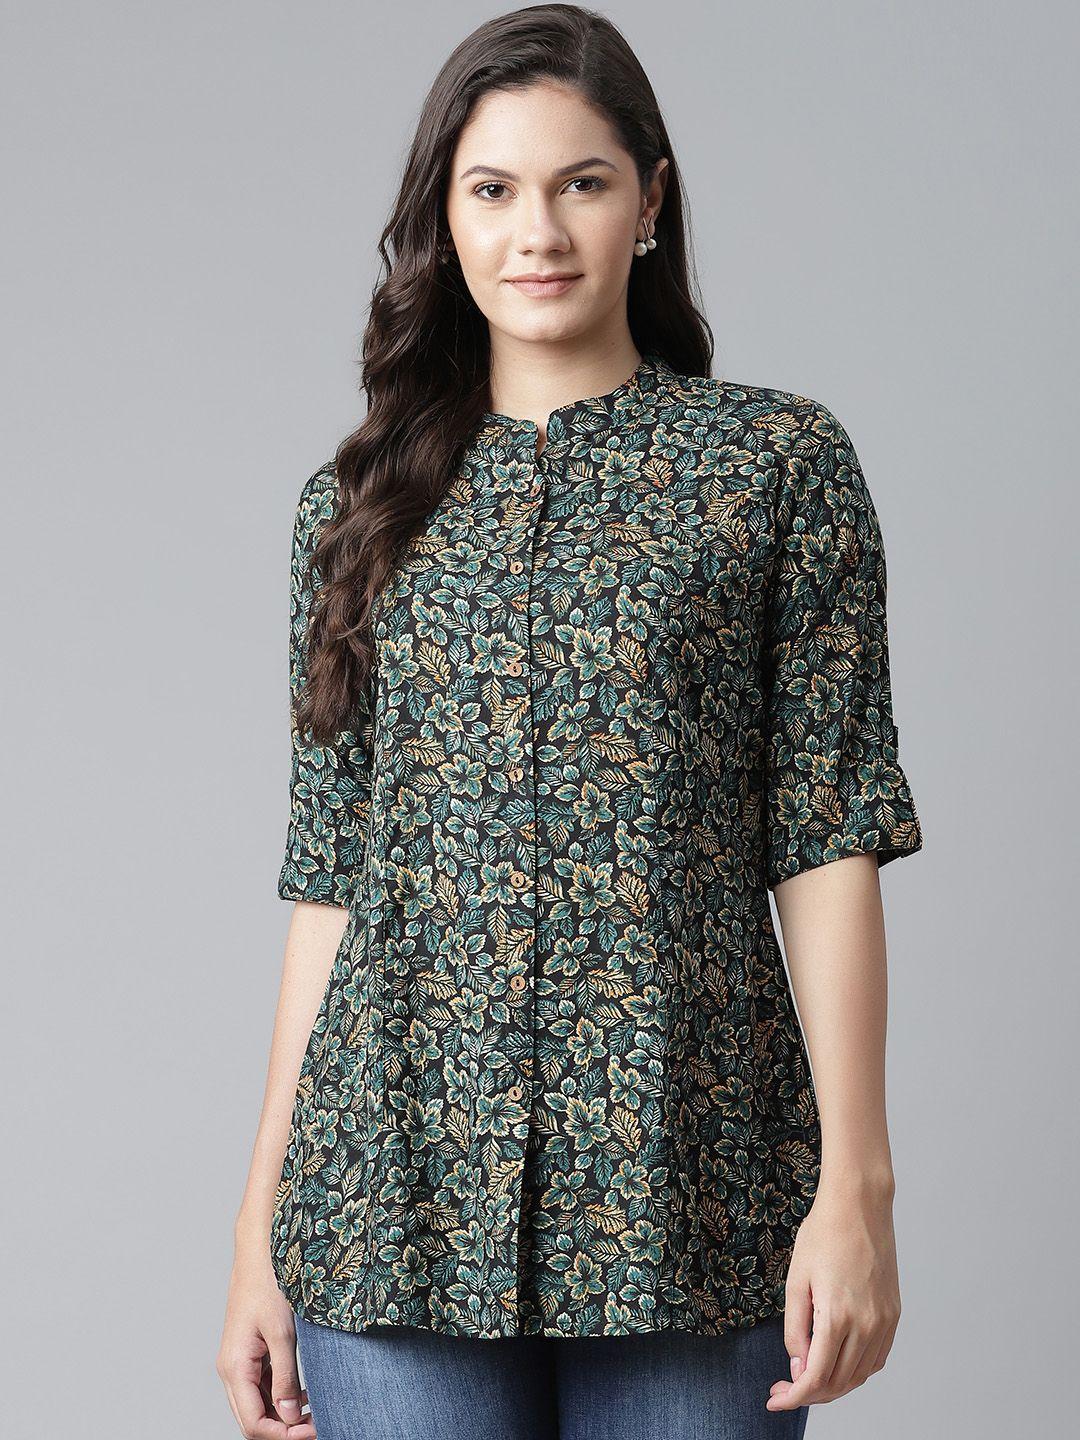 divena women navy blue & green floral printed casual shirt